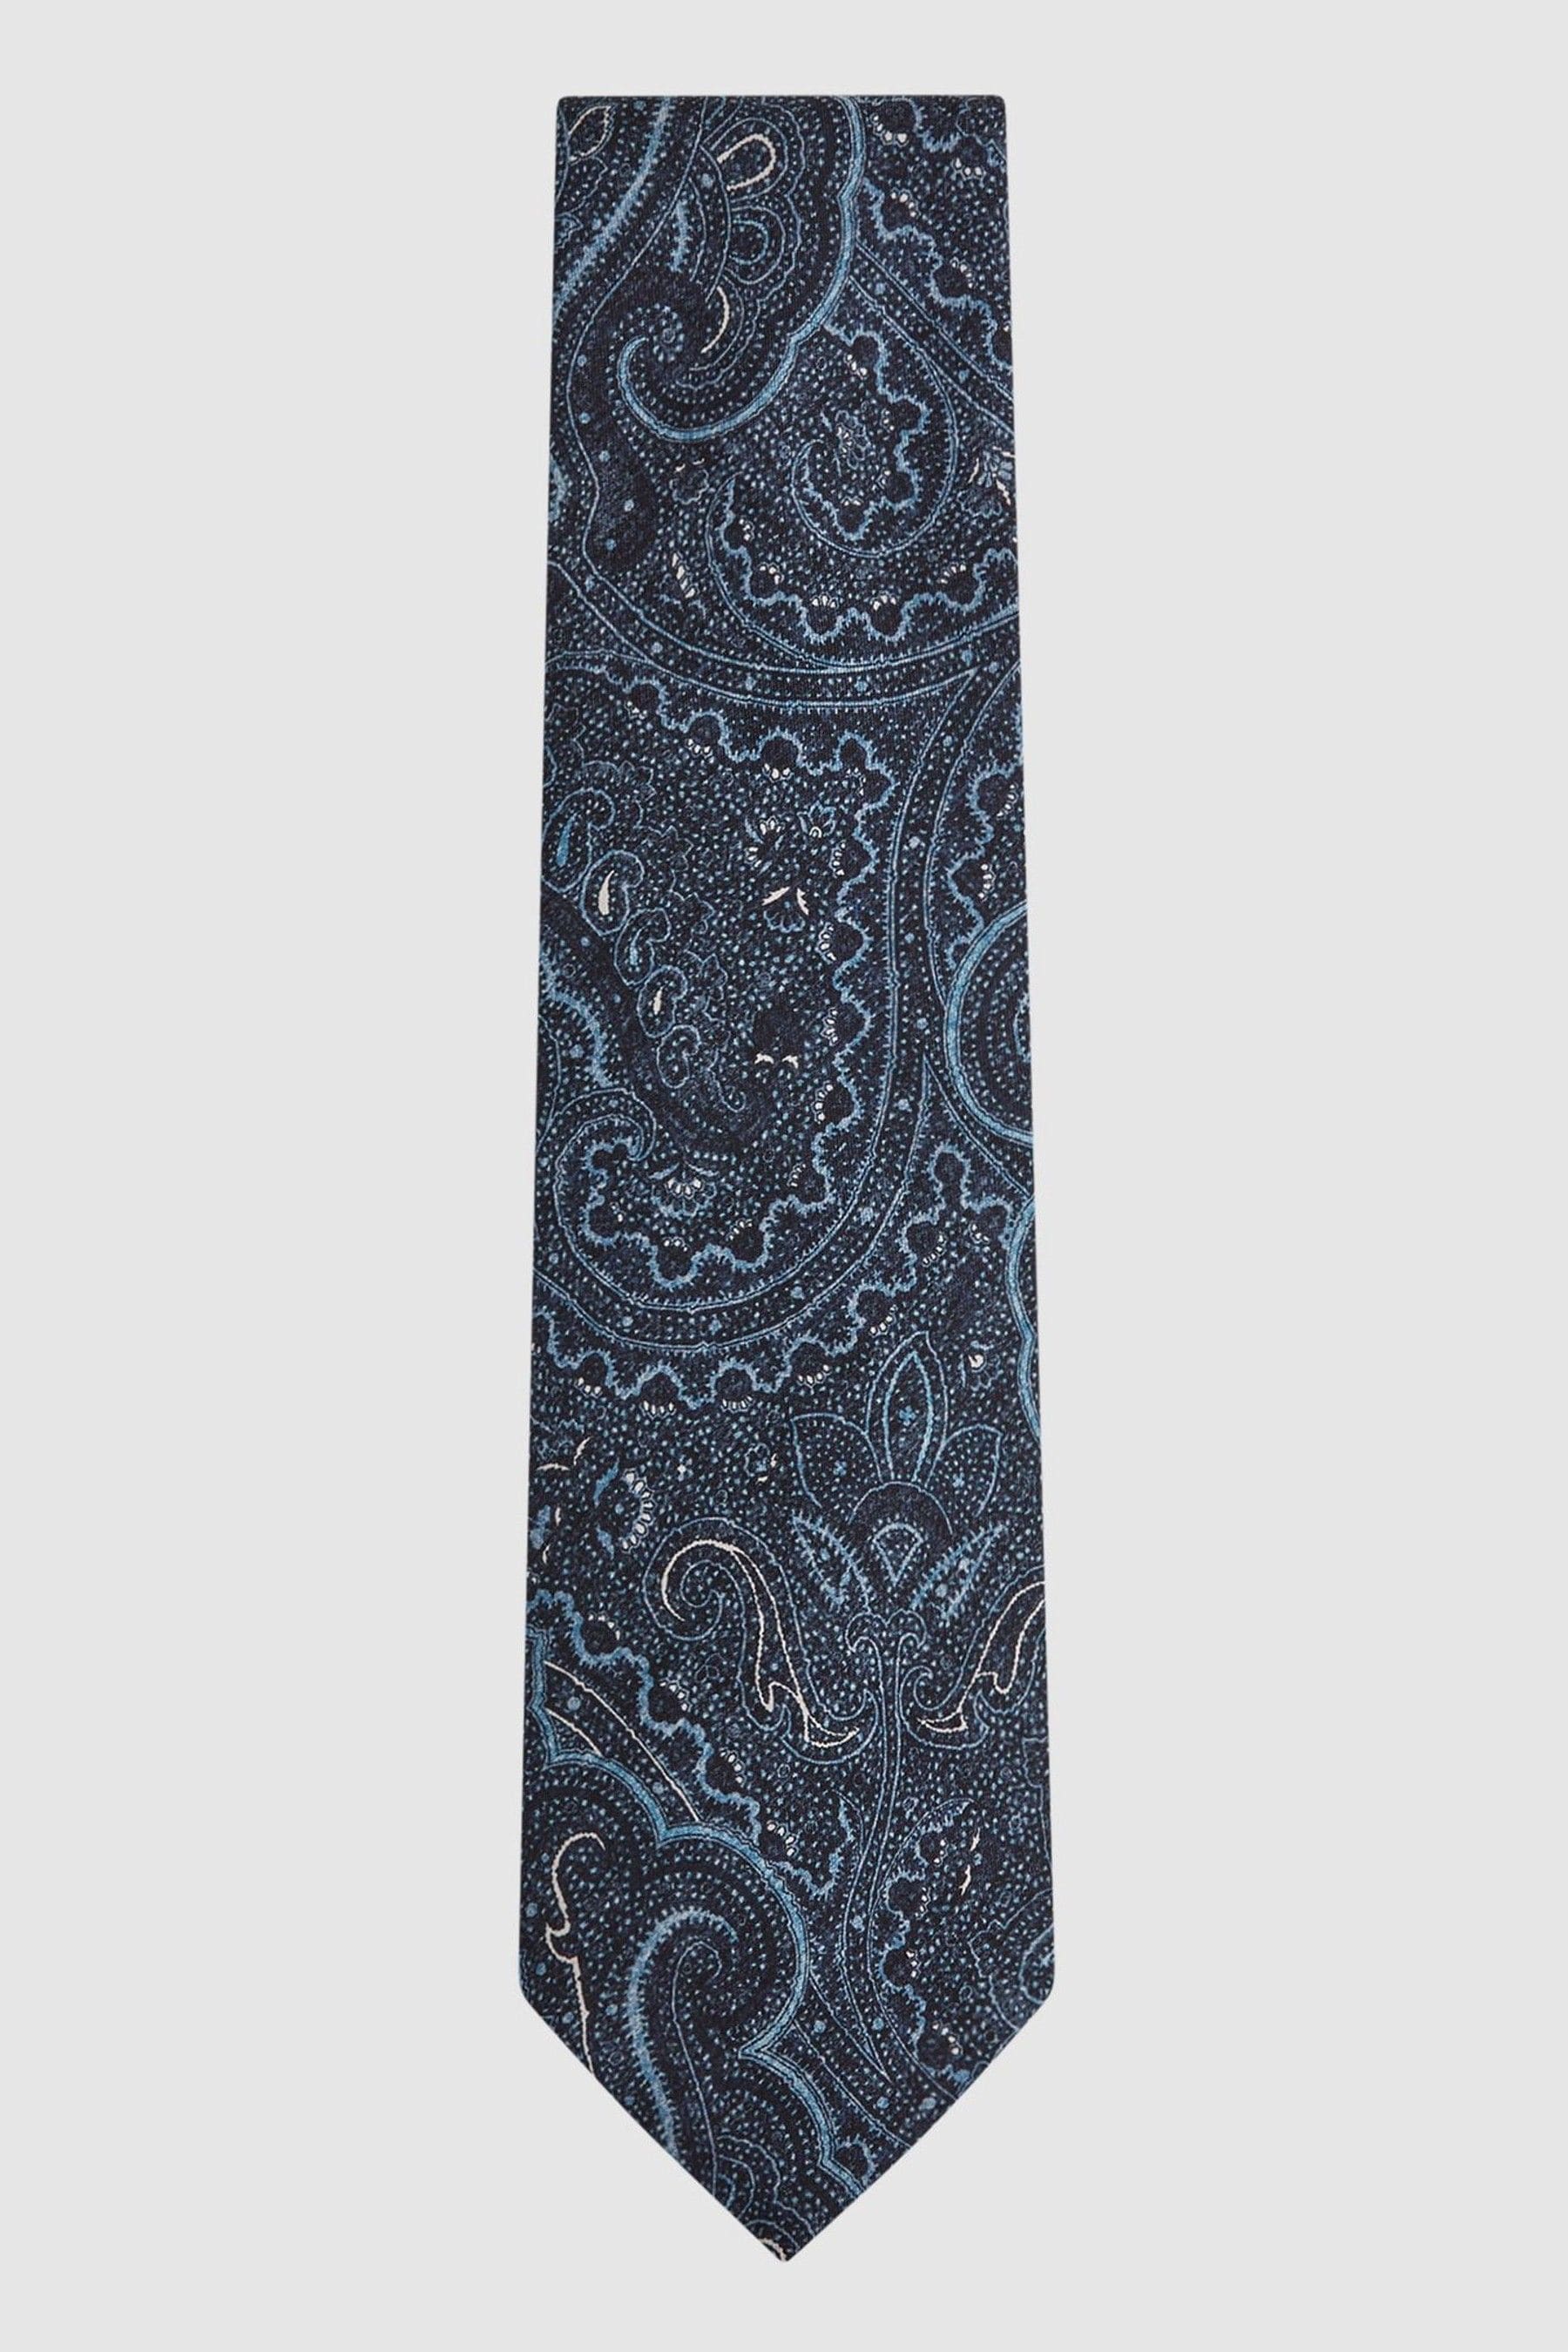 Reiss Lipari - Indigo Lipari Silk Paisley Tie, One